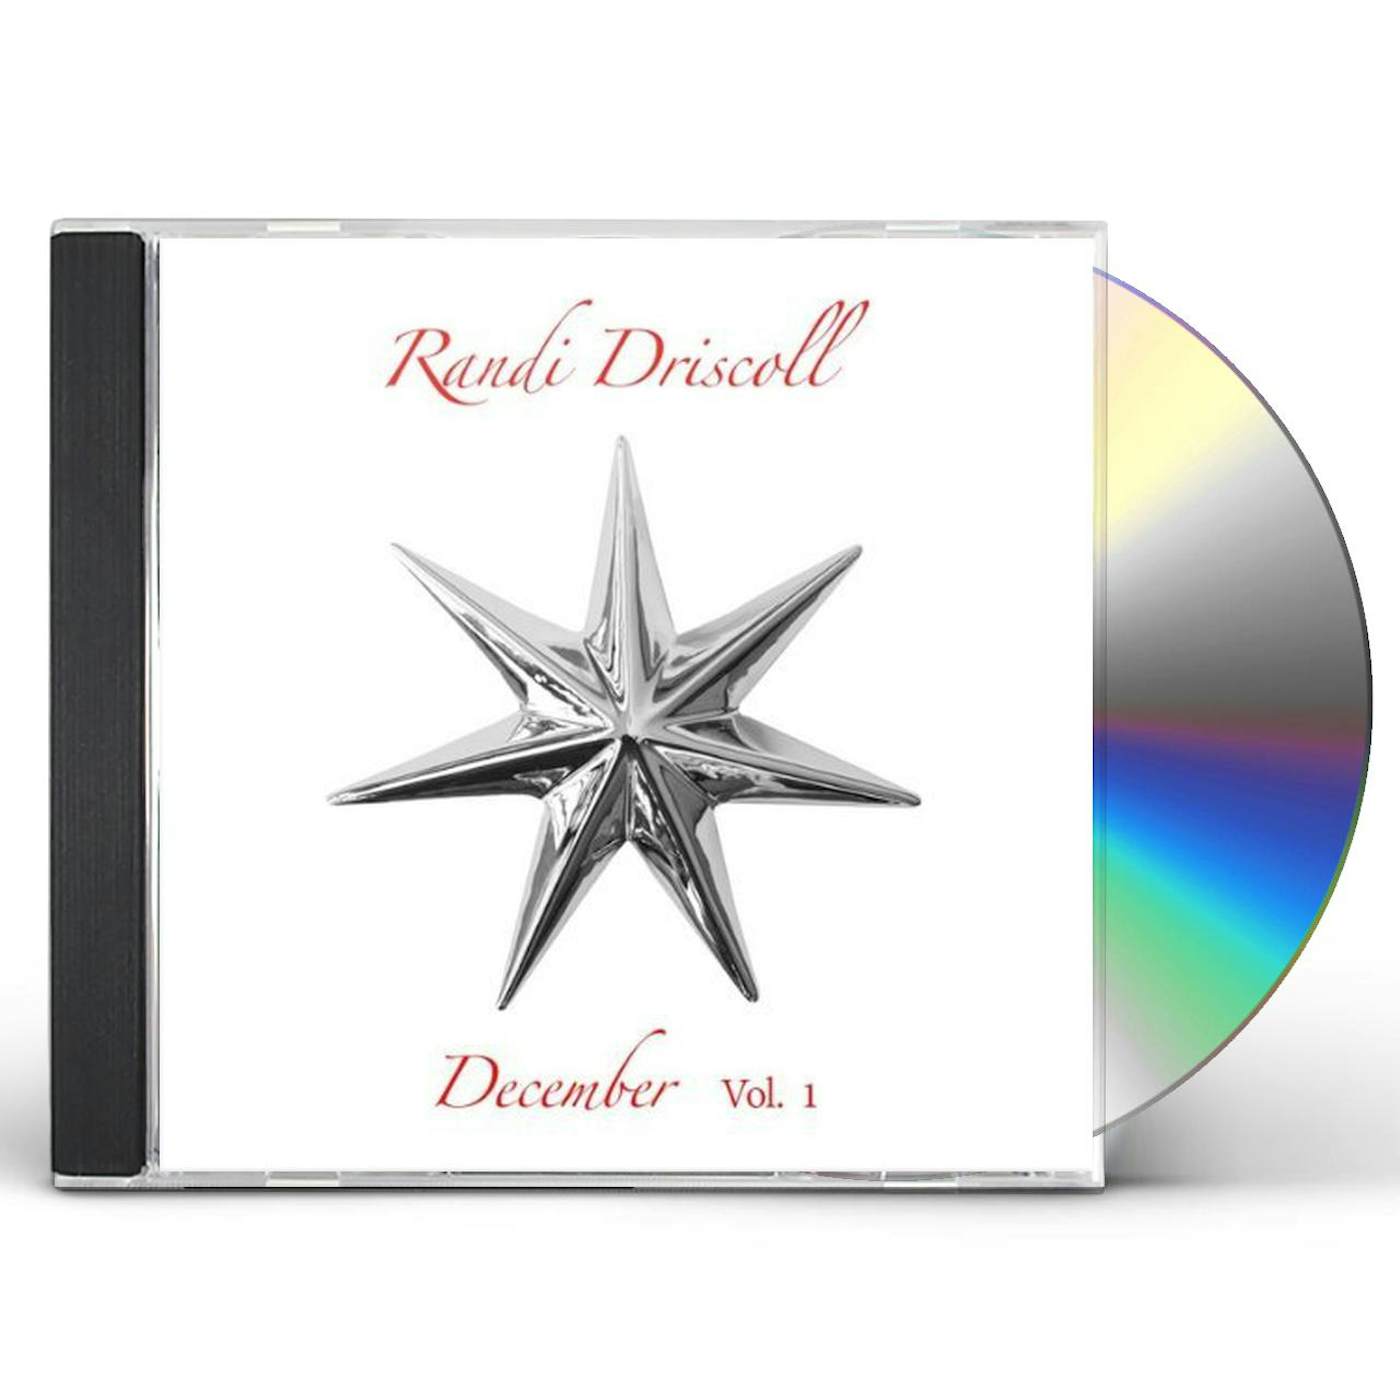 Randi Driscoll DECEMBER VOL. 1 CD